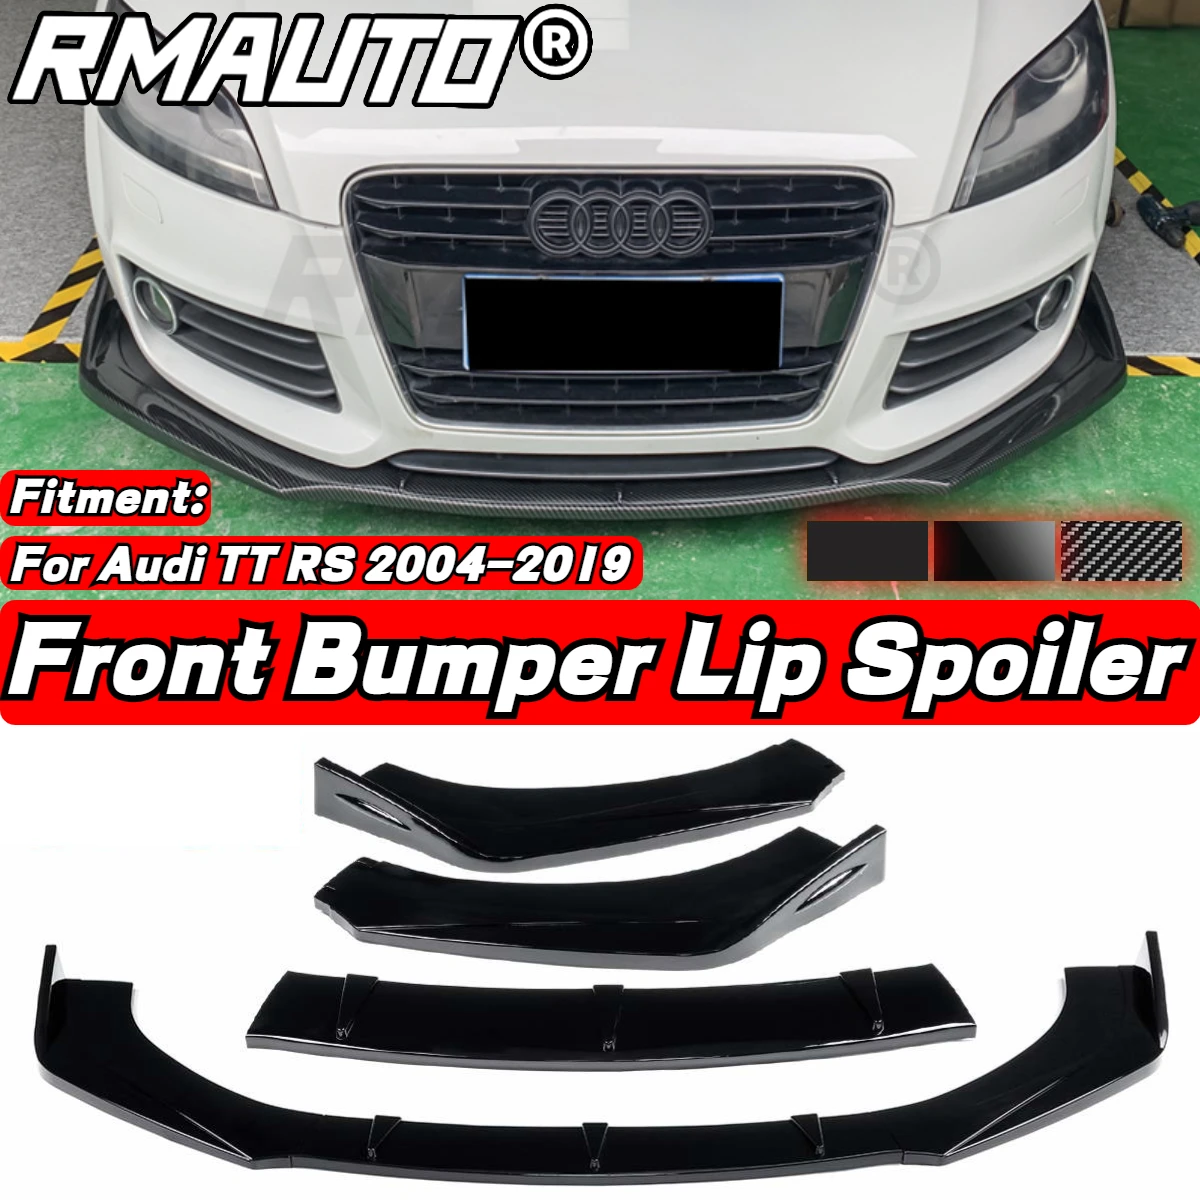 RMAUTO 3PCS TT RS Car Front Bumper Splitter Lip Splitter Body Kit Spoiler Diffuser Protector Guard For Audi TT RS 2004-2019